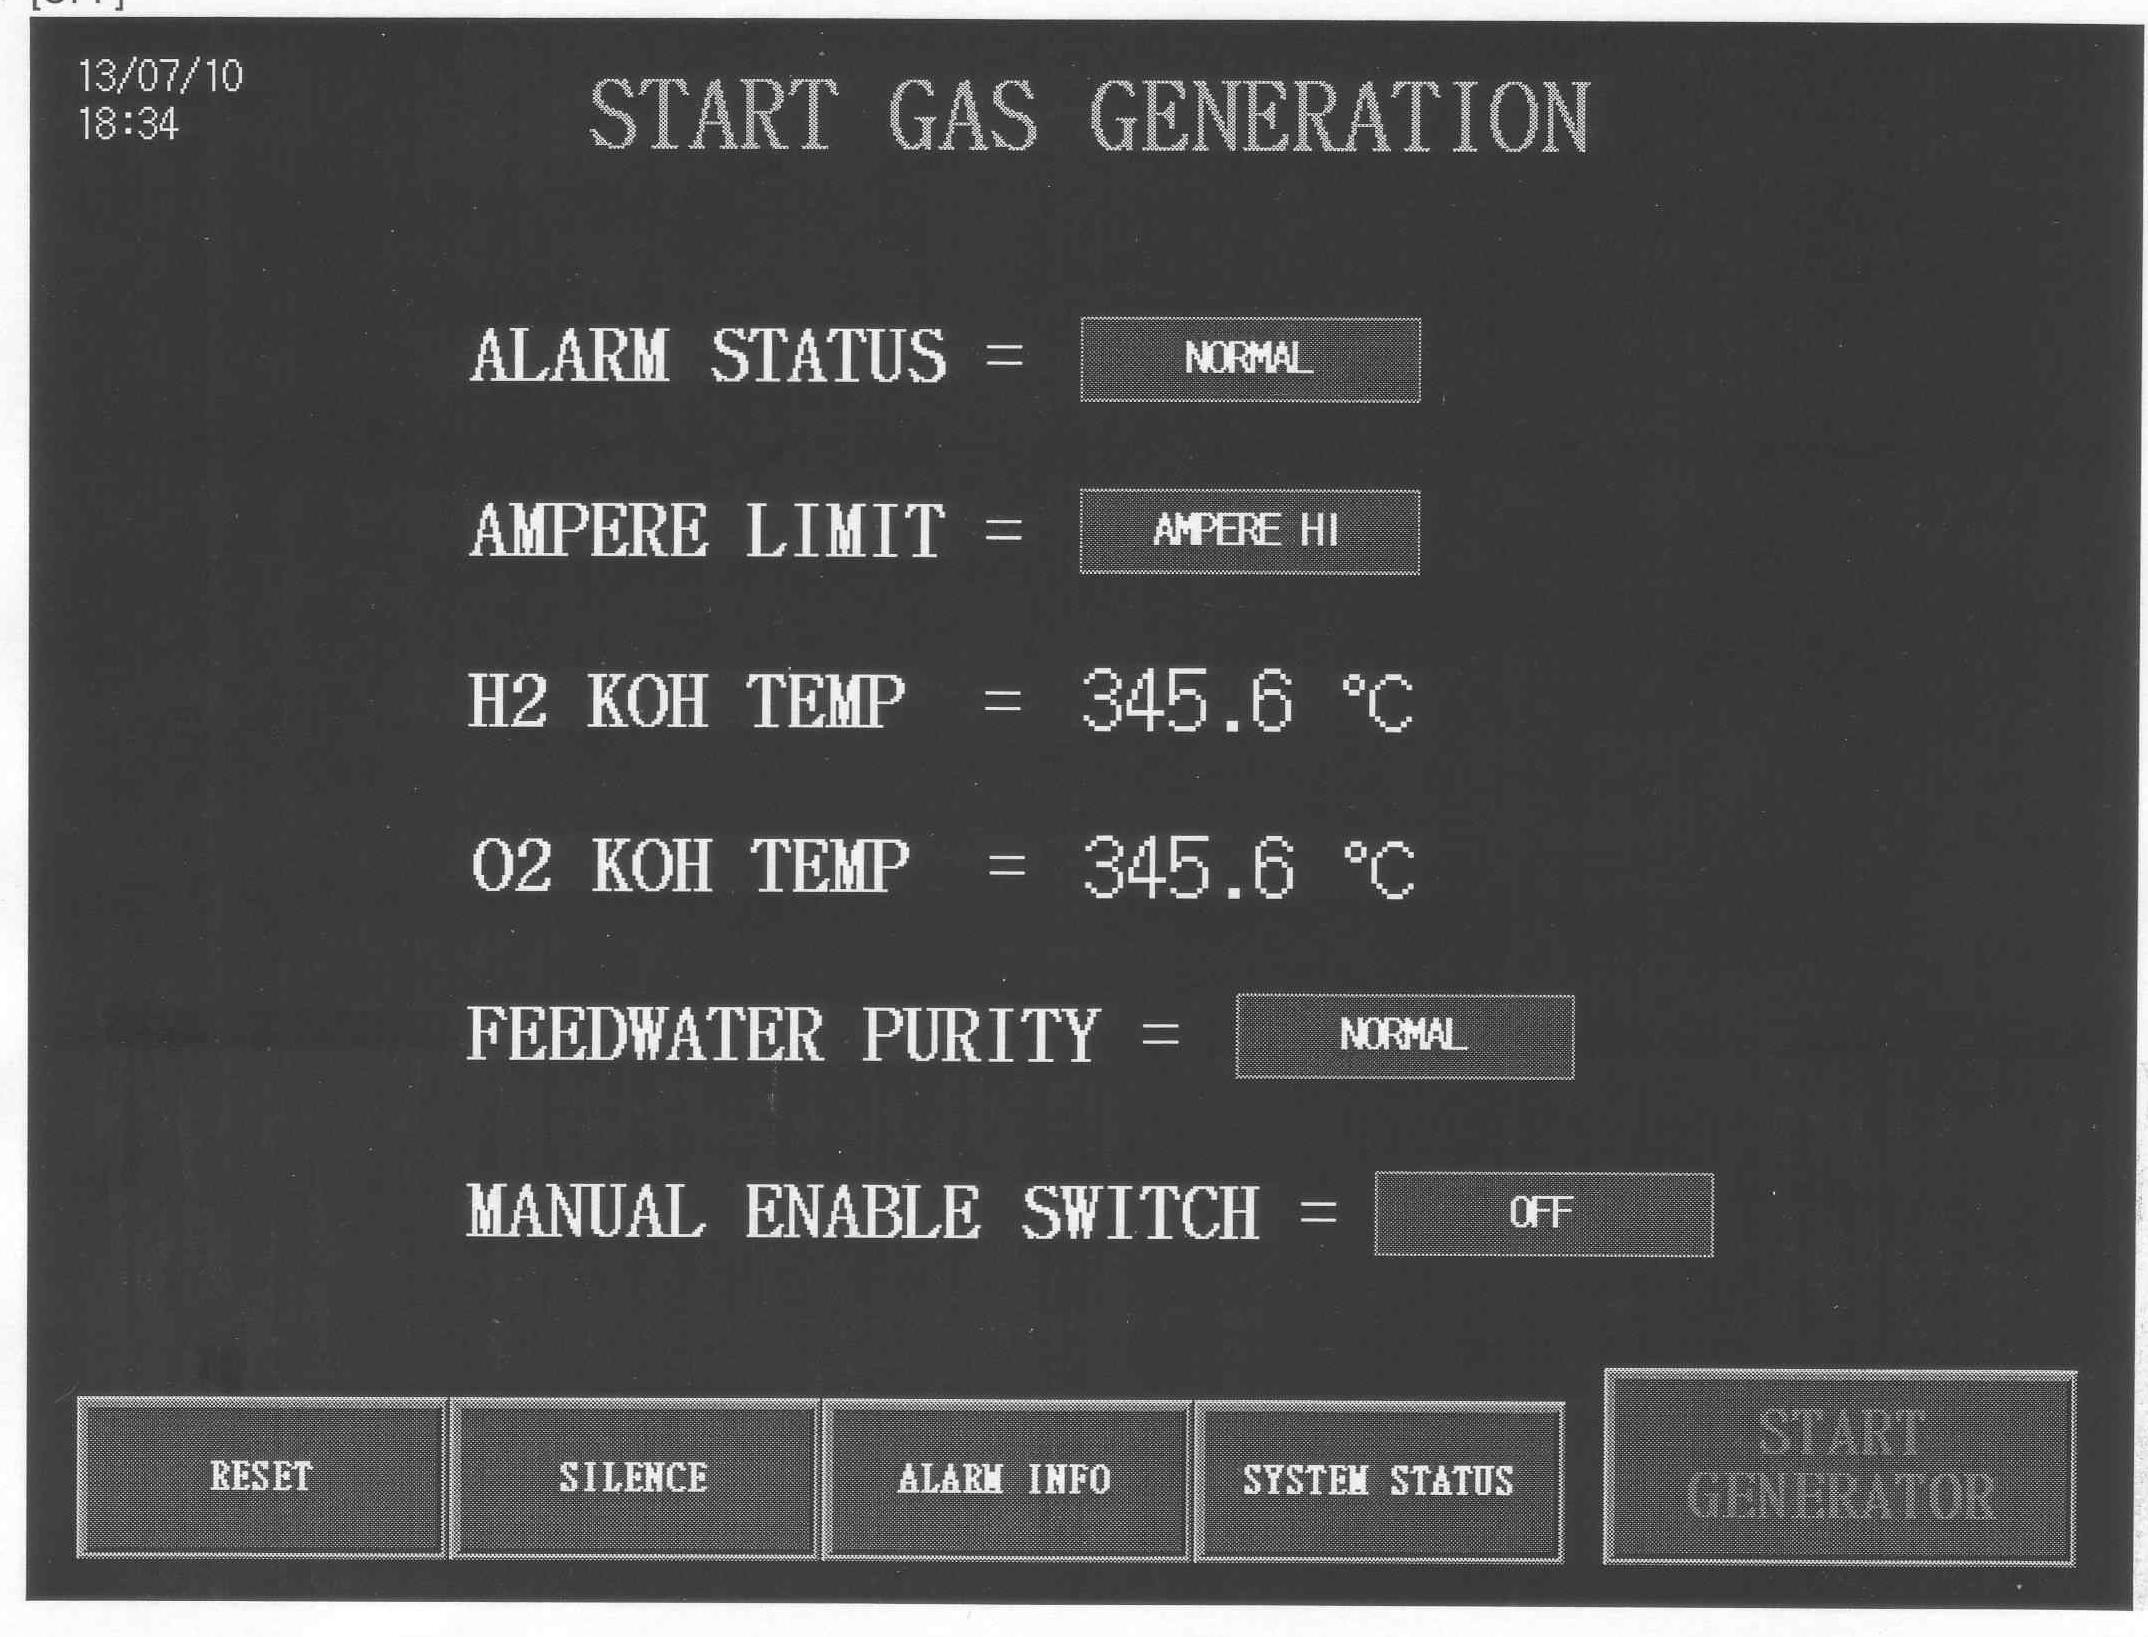 START GAS GENERATION 화면